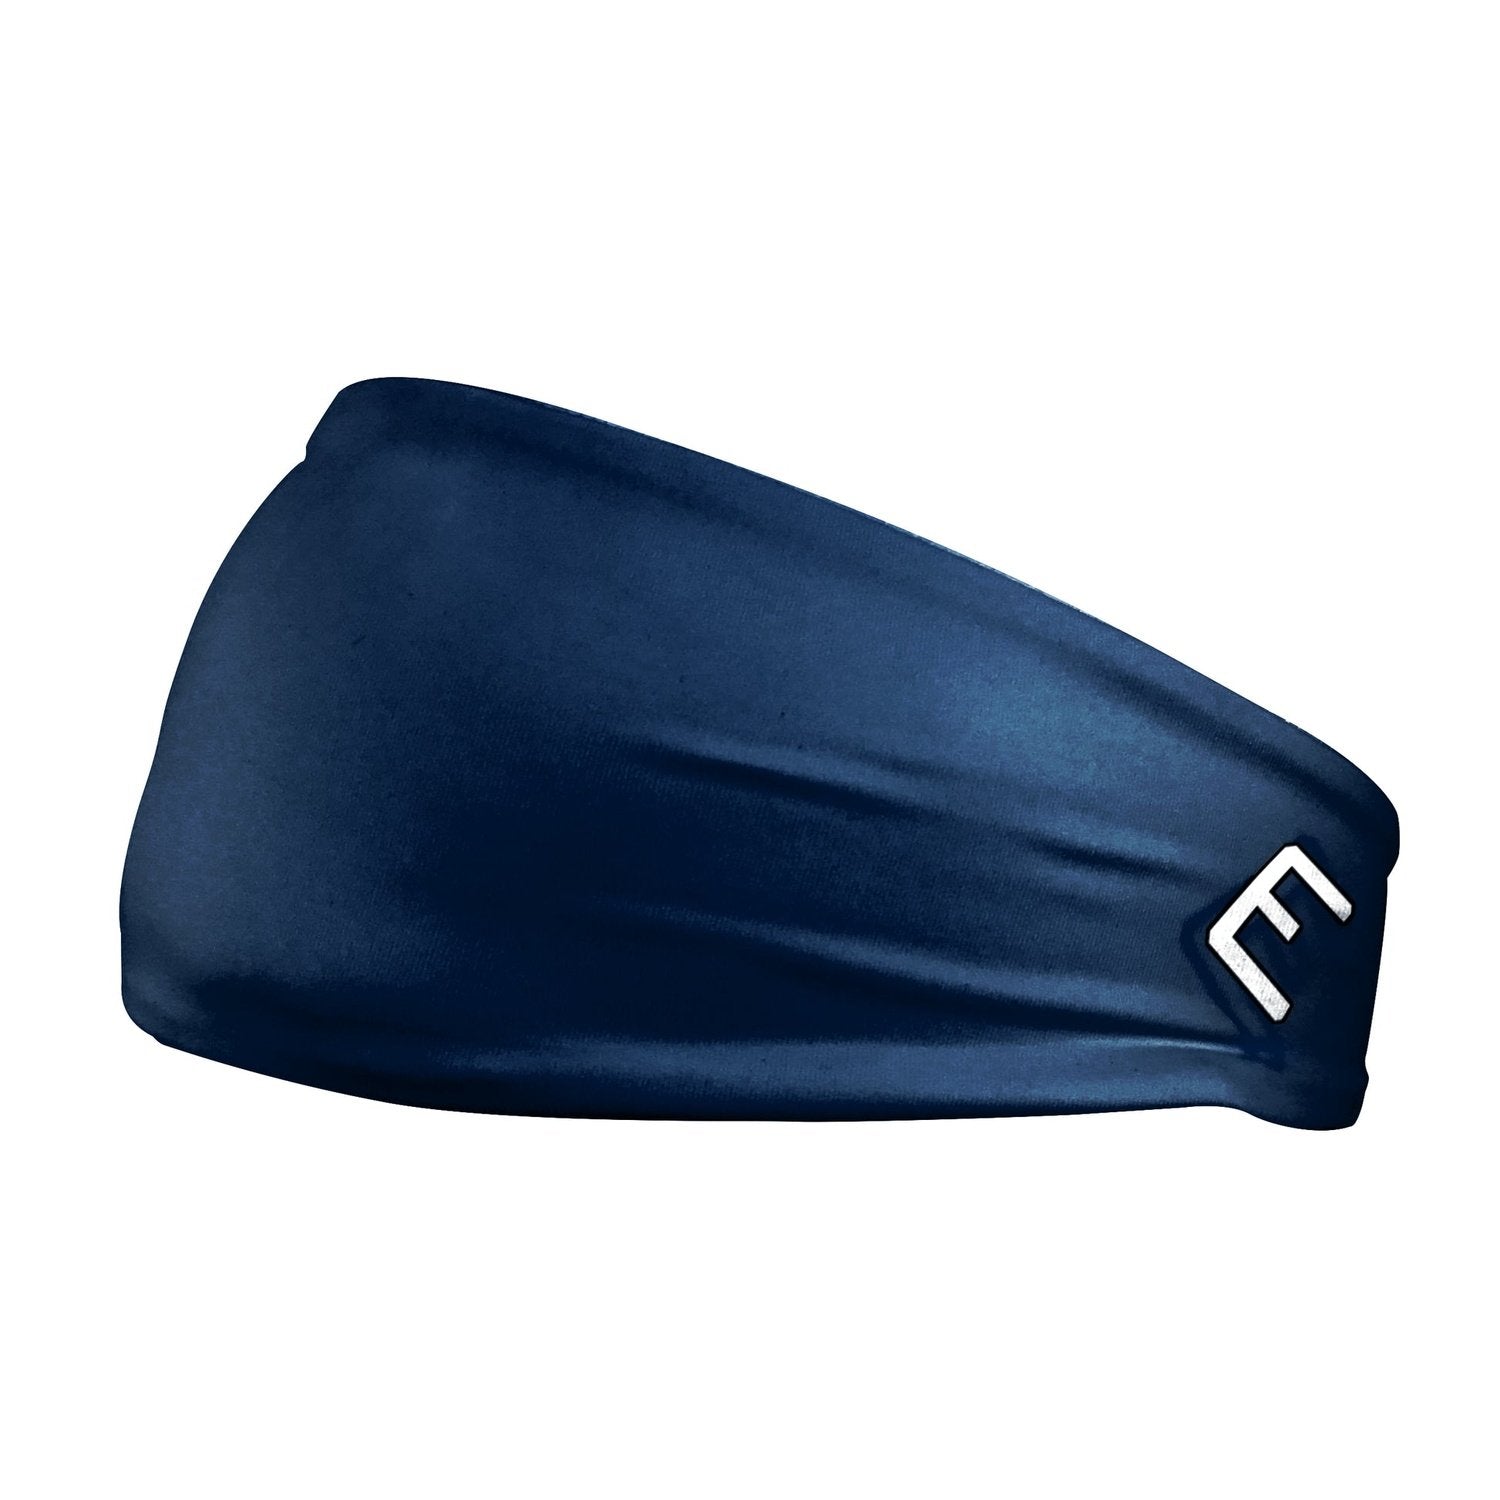 Elite Athletic Gear Blue Headband kaufen bei HighPowered.ch